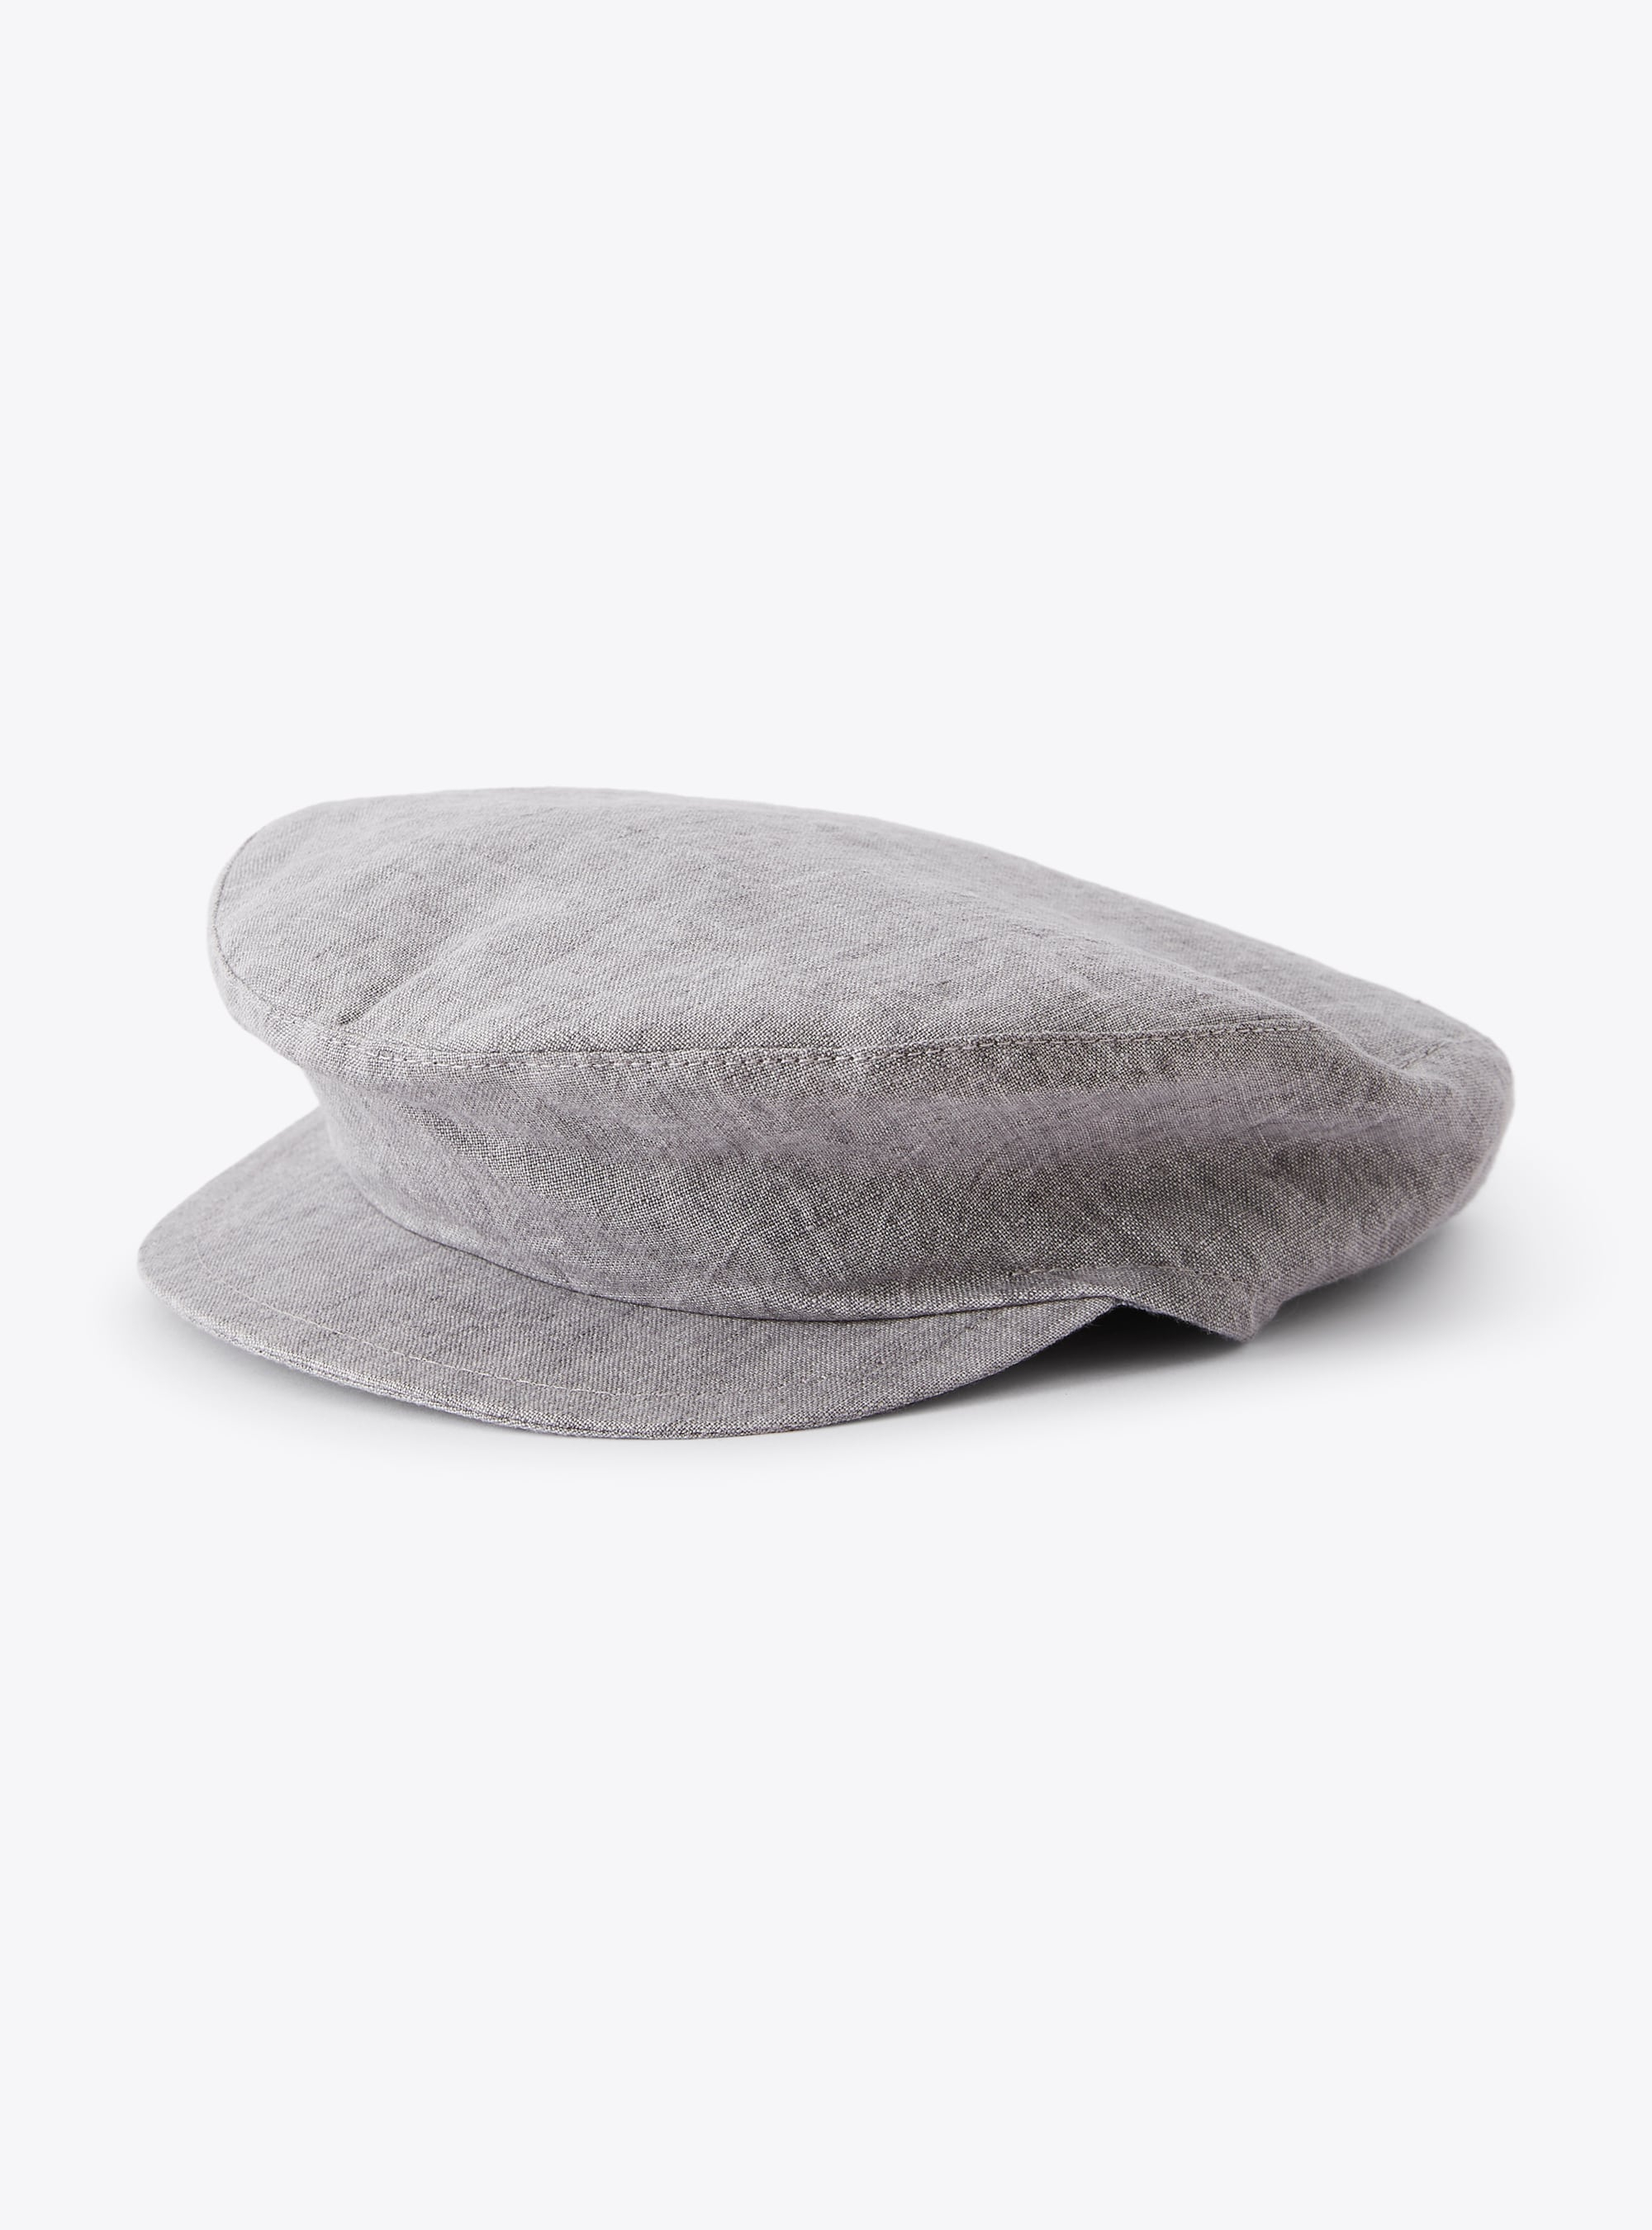 Flat cap in grey linen - Accessories - Il Gufo